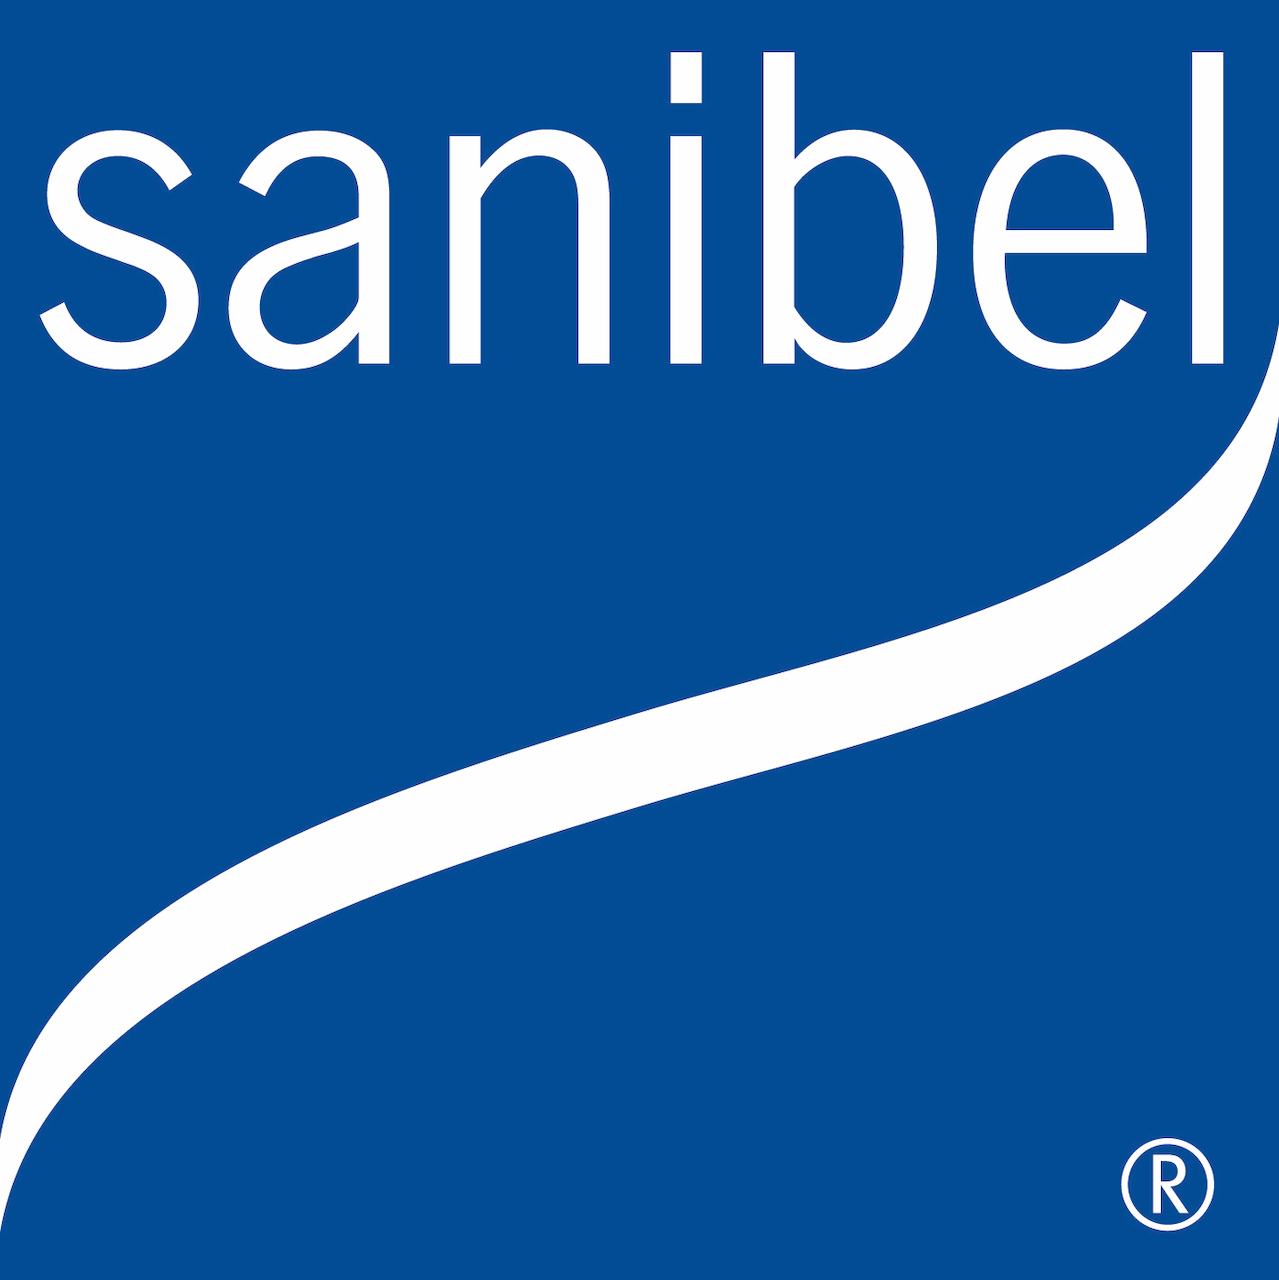 Sanibel